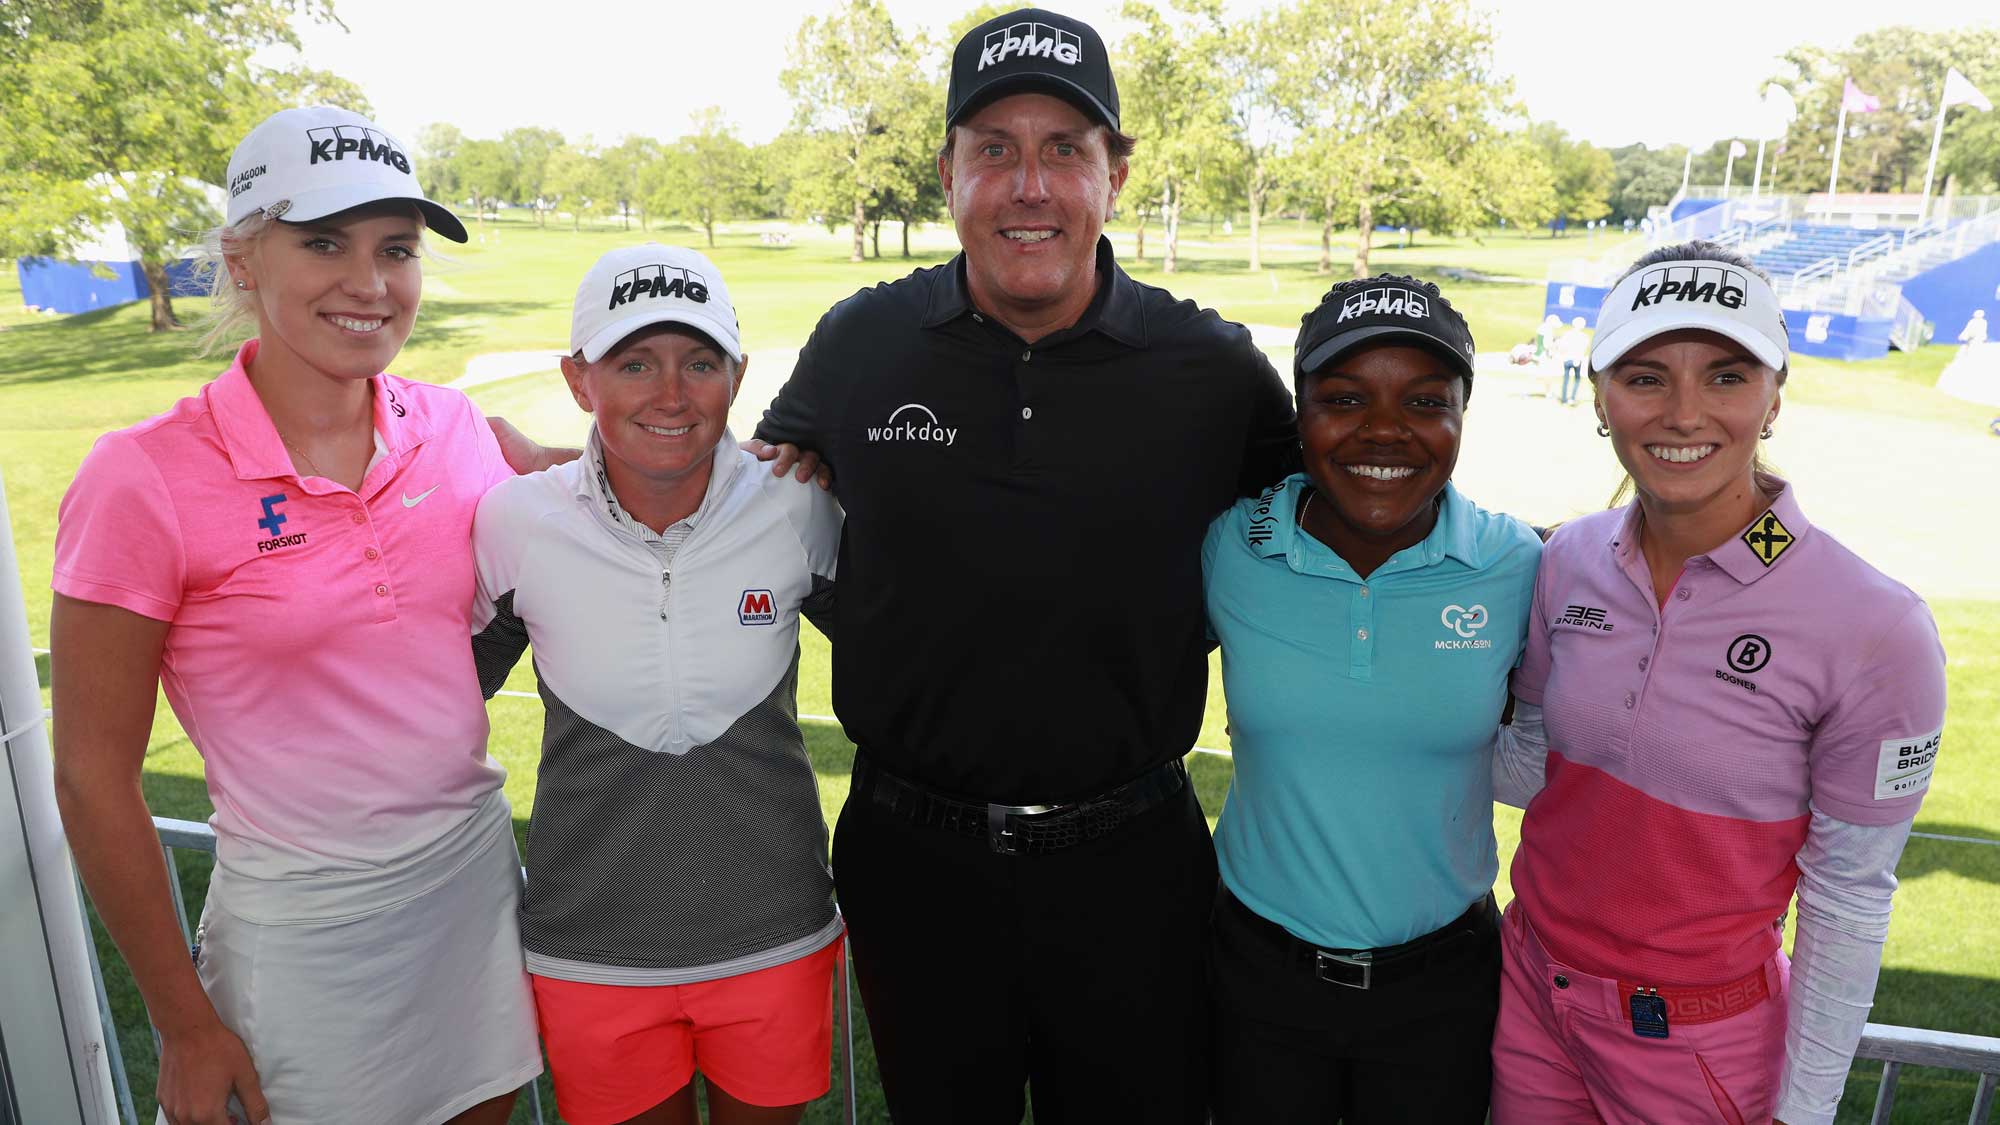  (L-R) Olafia Kristinsdottir, Stacy Lewis, Phil Mickelson, Mariah Stackhouse and Klara Spilkova pose together prior to the start of the 2017 KPMG Women's PGA Championship